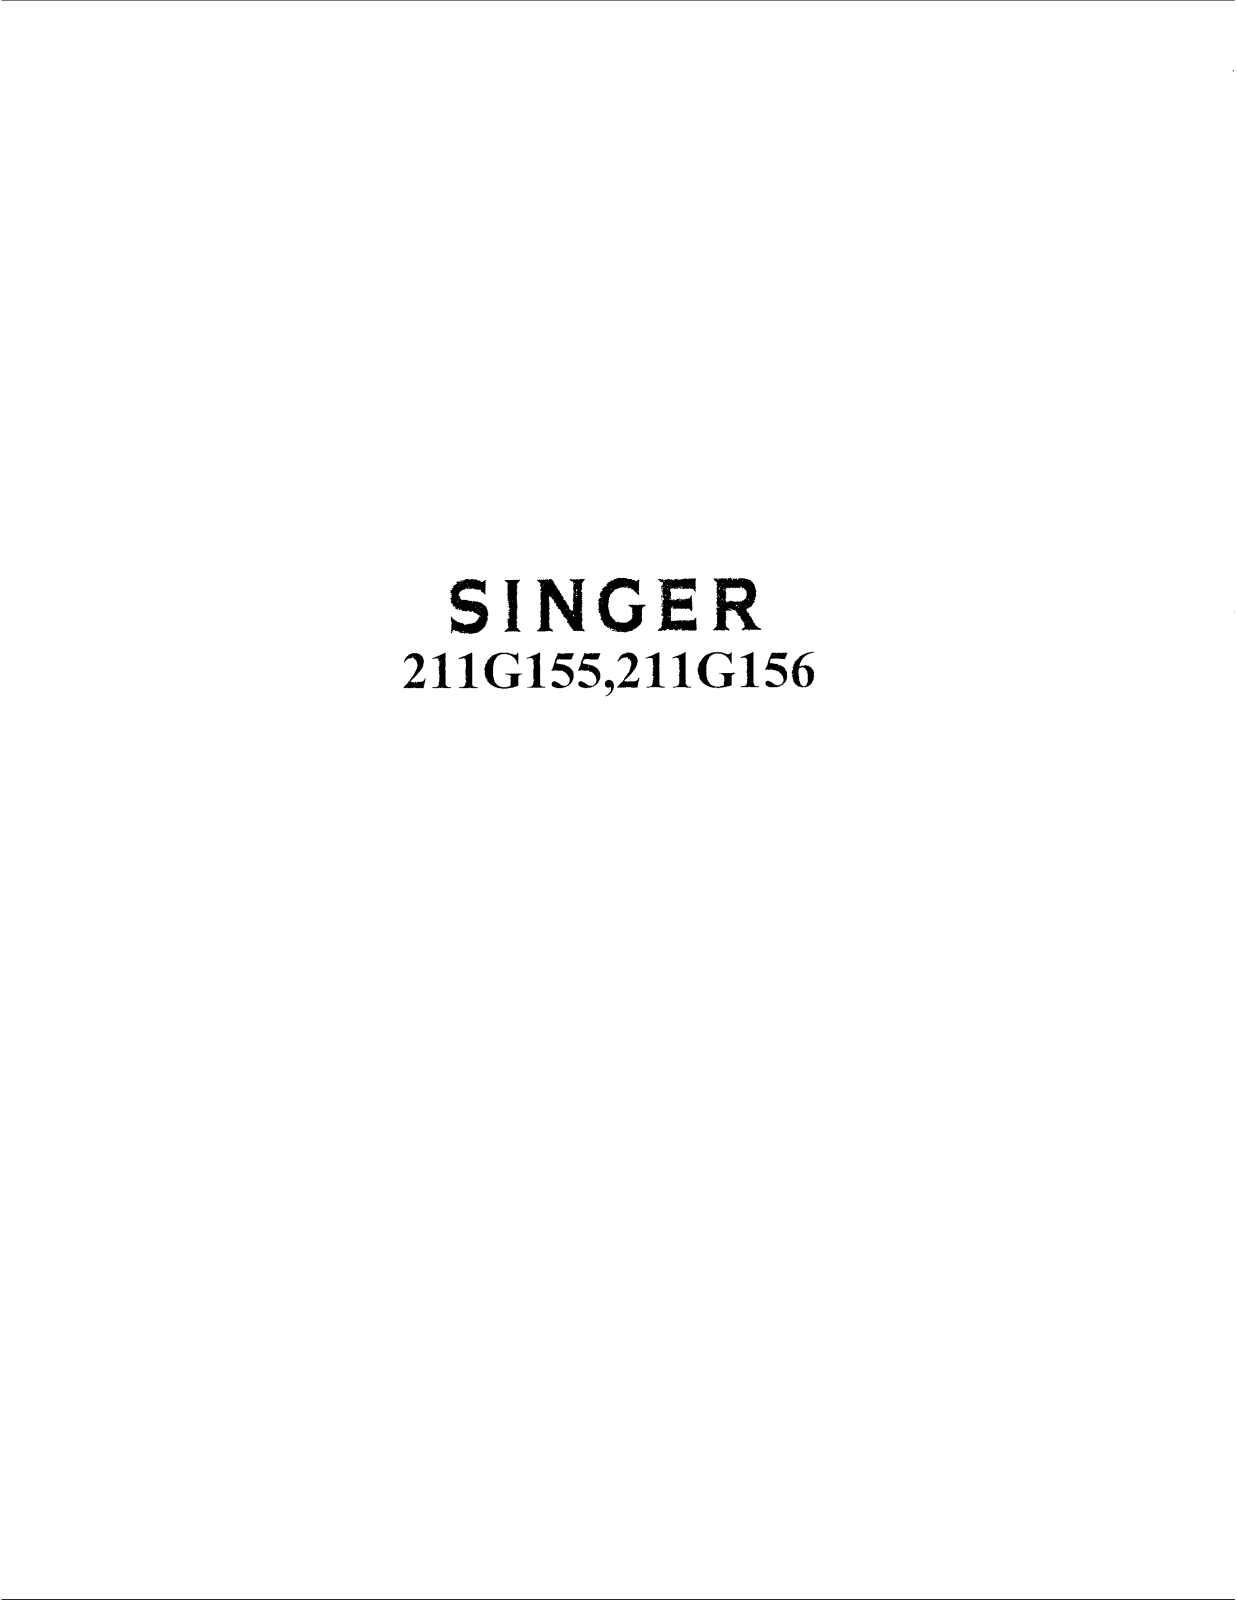 Singer 221G155, 221G156 Service Manual